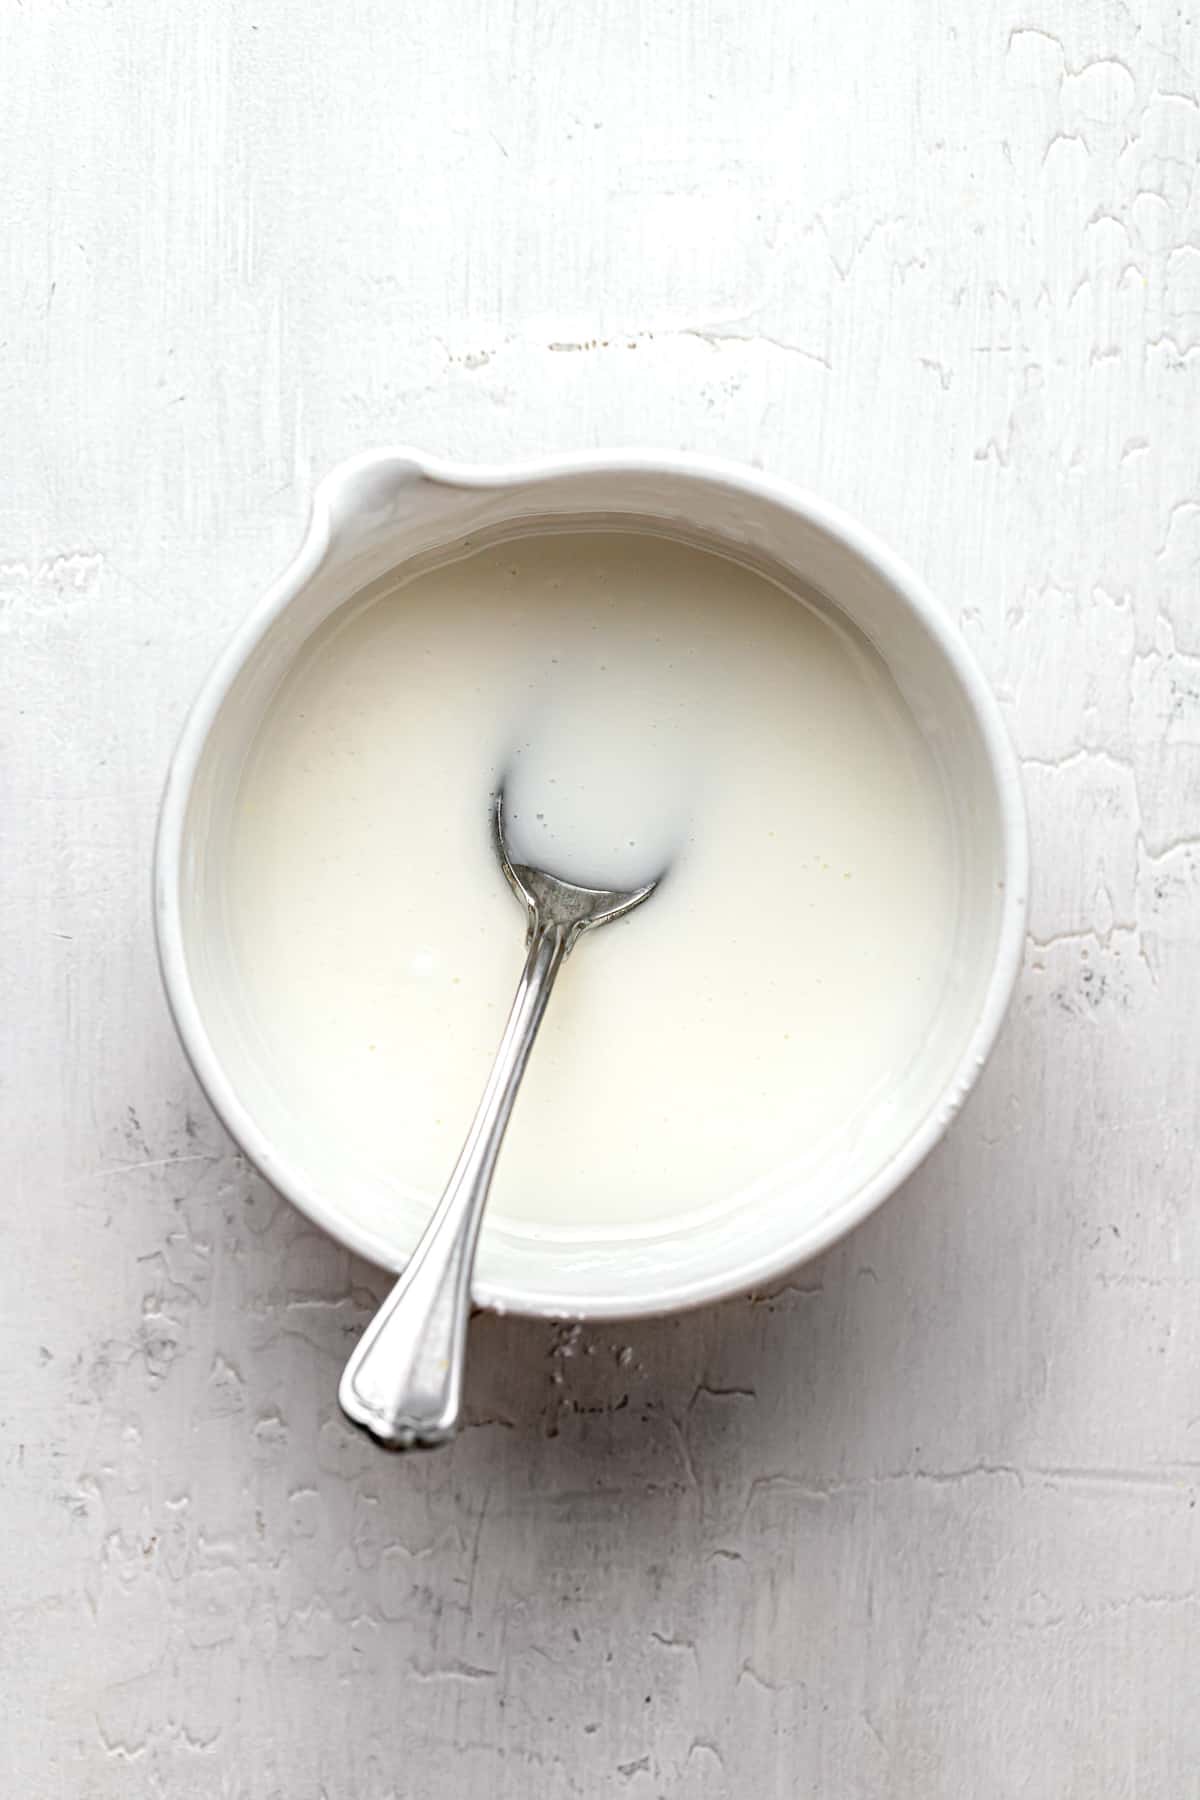 lemon glaze in white bowl with spoon.